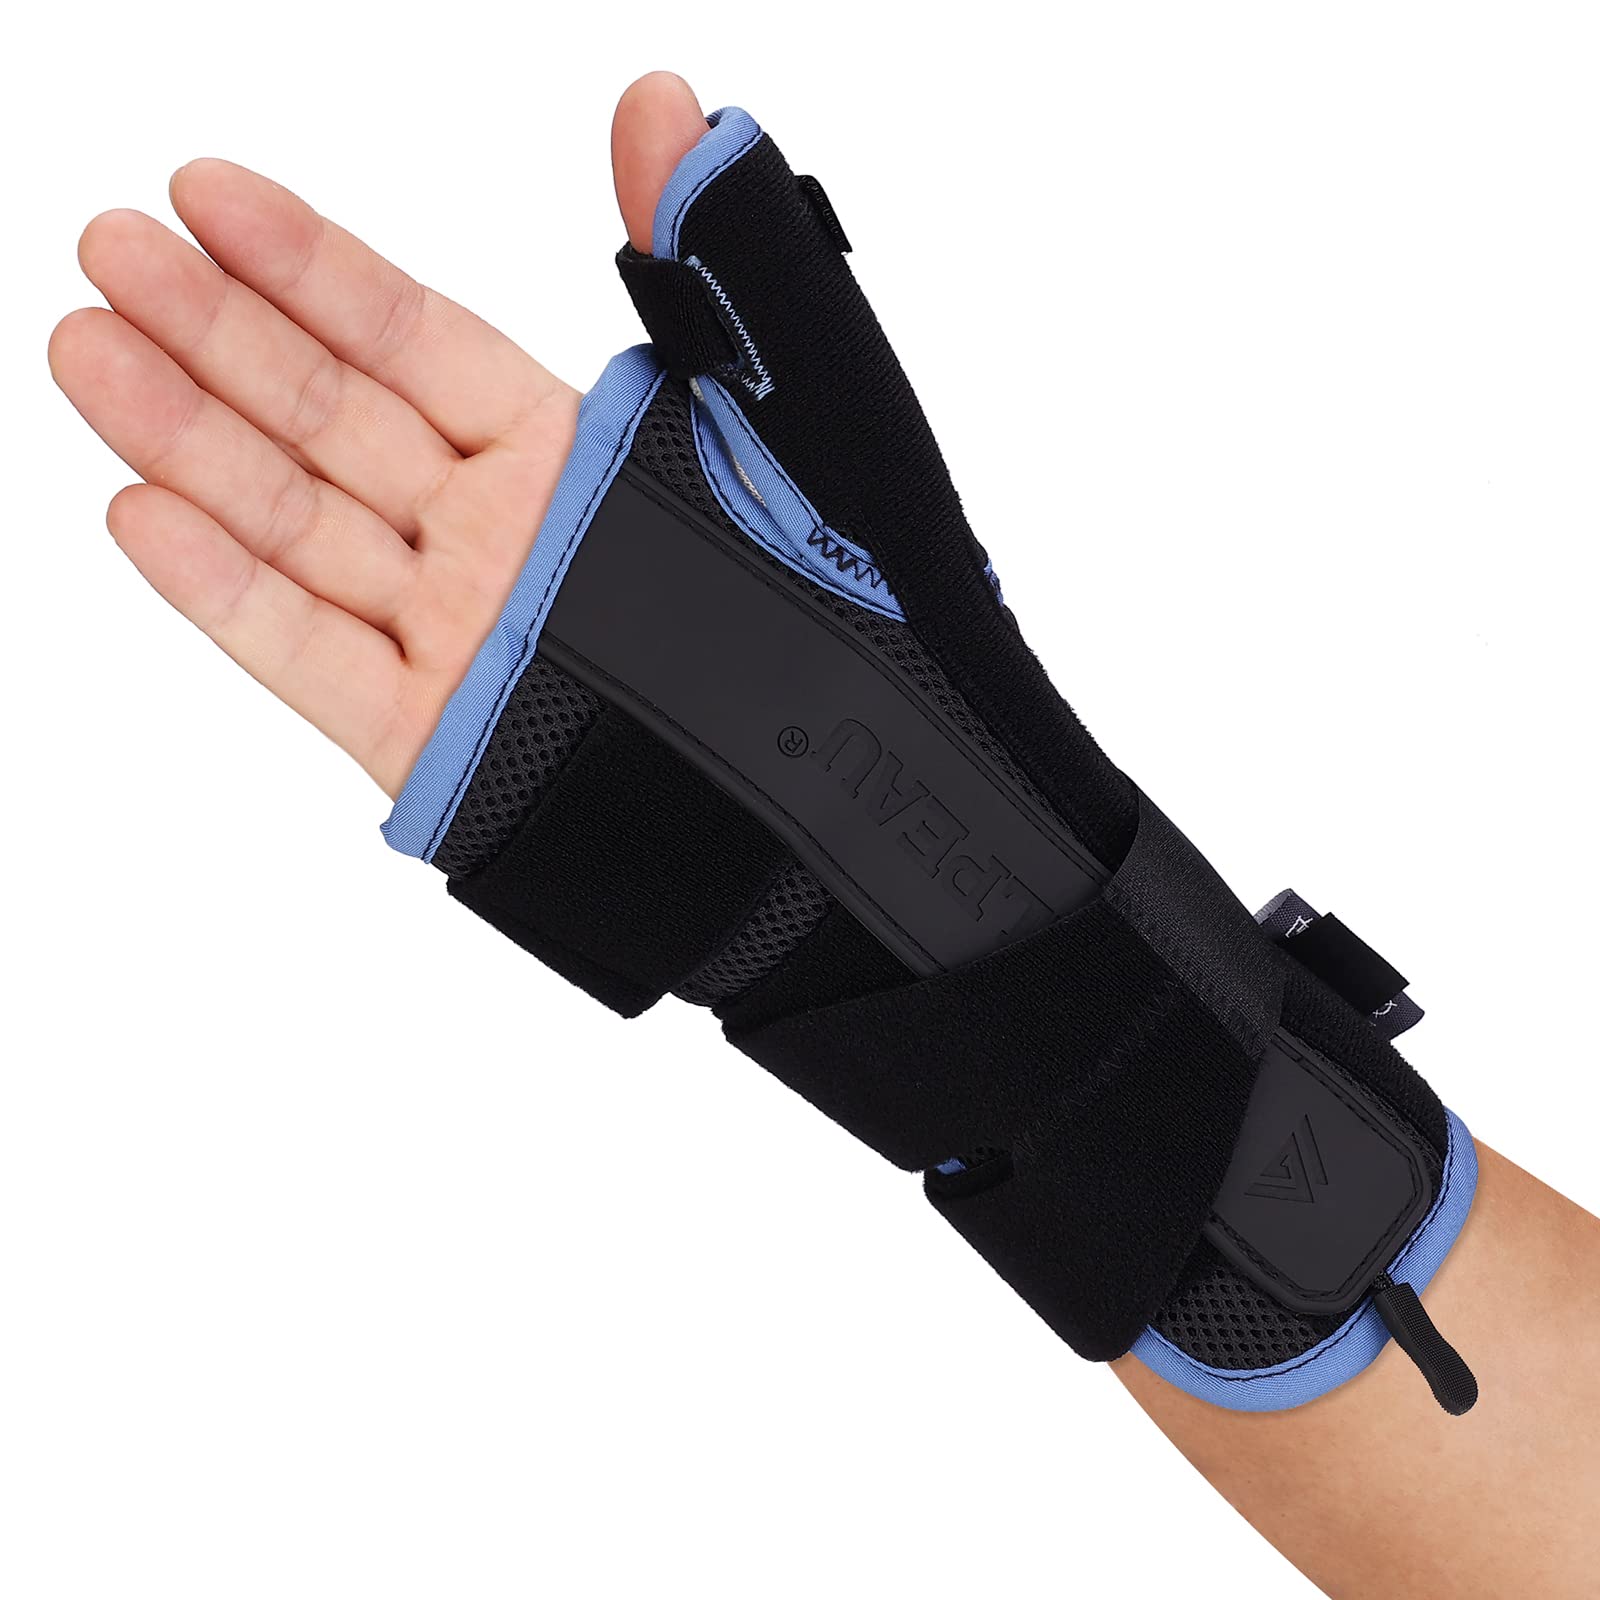 Velpeau Wrist Brace with Thumb Spica Splint for De Quervain's  Tenosynovitis, Carpal Tunnel Pain, Stabilizer for Tendonitis, Arthritis,  Sprains 